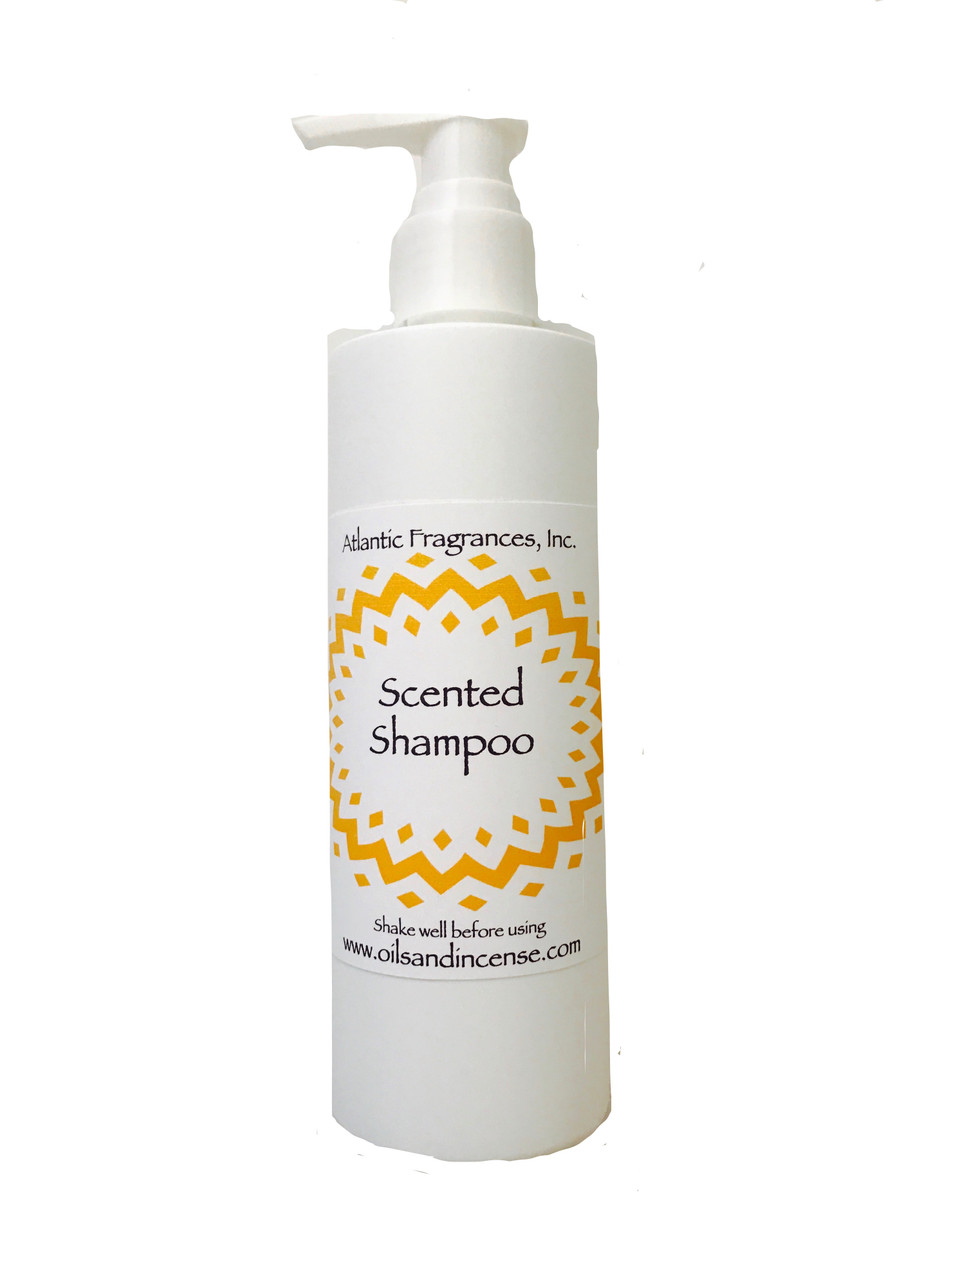 Acqua Di Gio type Shampoo, 8 oz. size - Atlantic Fragrances